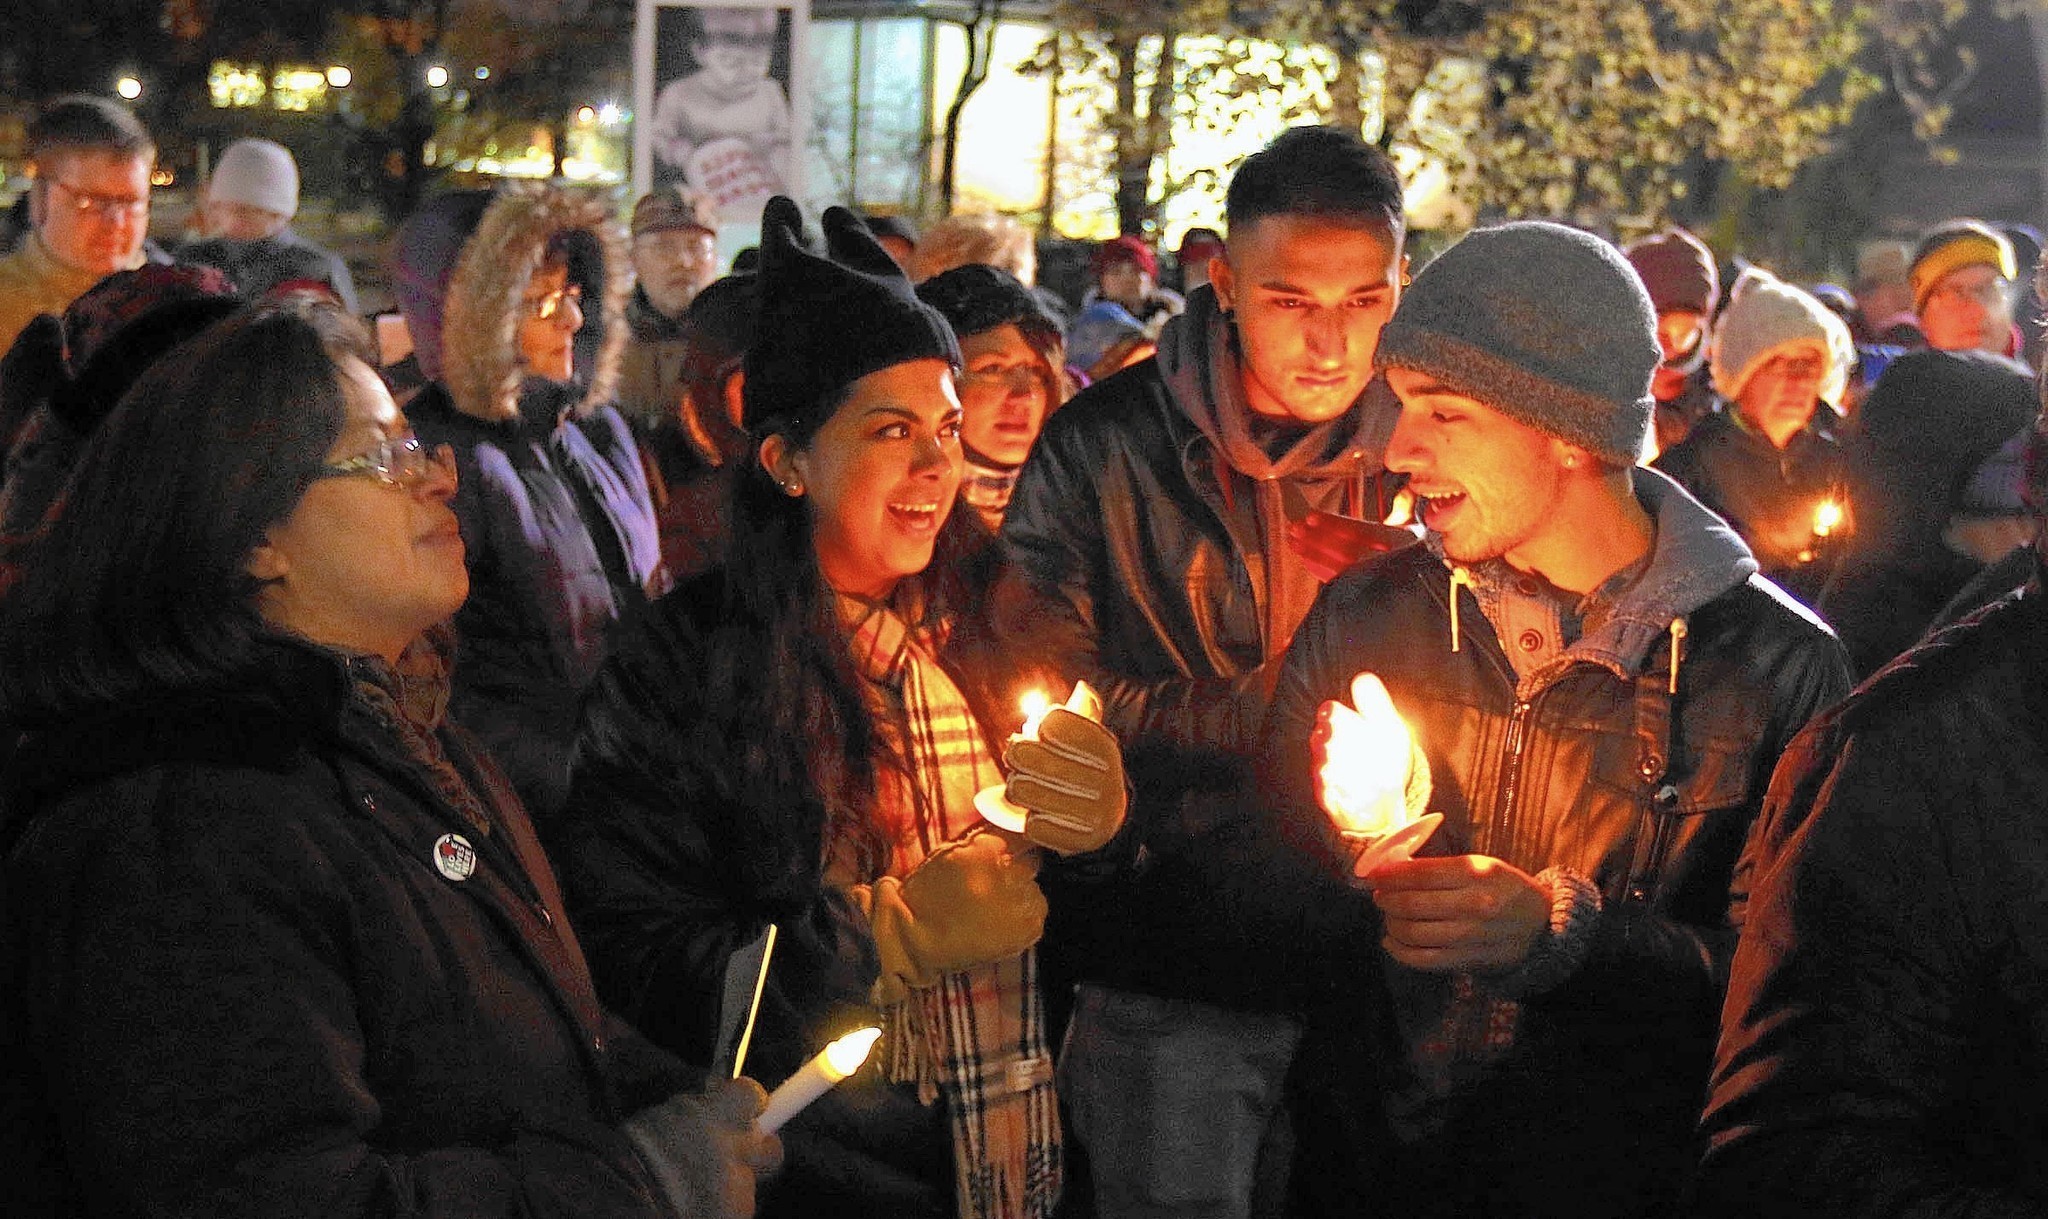 Elmhurst candlelight vigil encourages inclusion